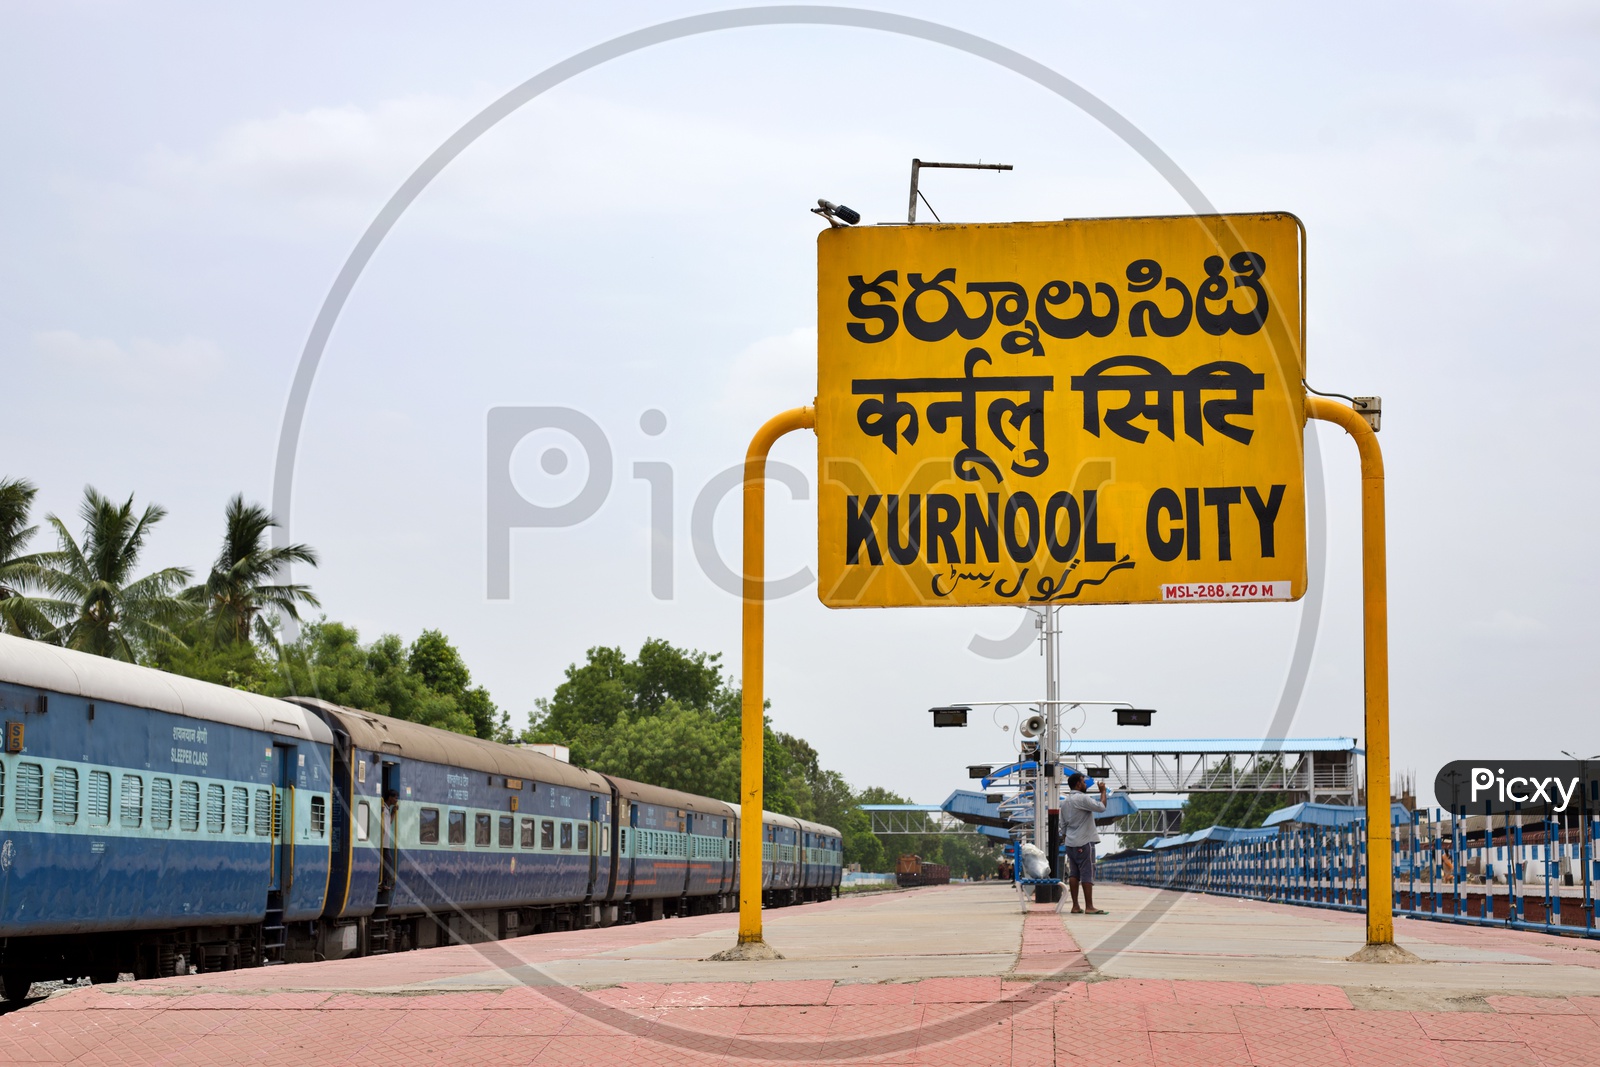 Kurnool City name board in Kurnool railway station.